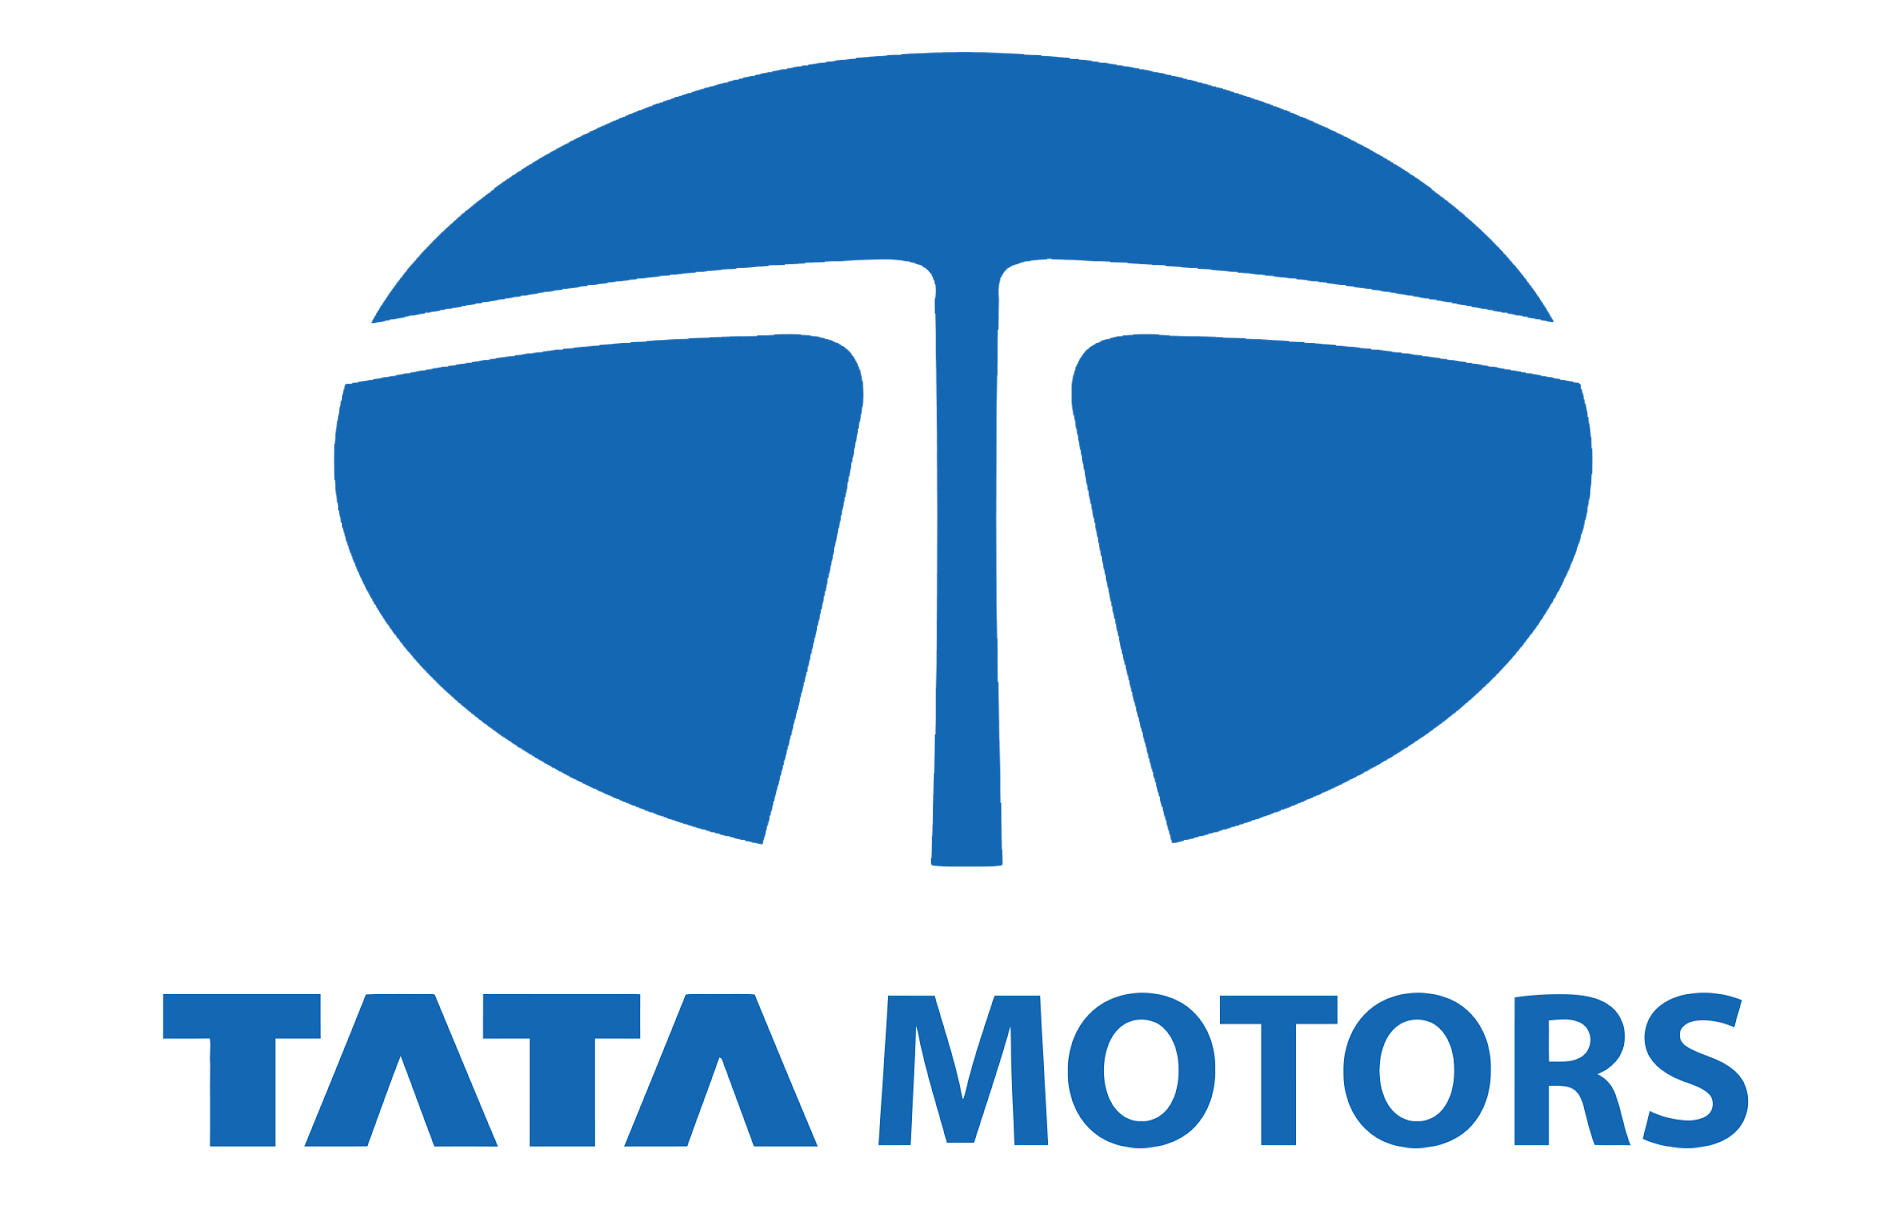 Tata Motors Cars Service Centre - Tiwari Automobiles Logo